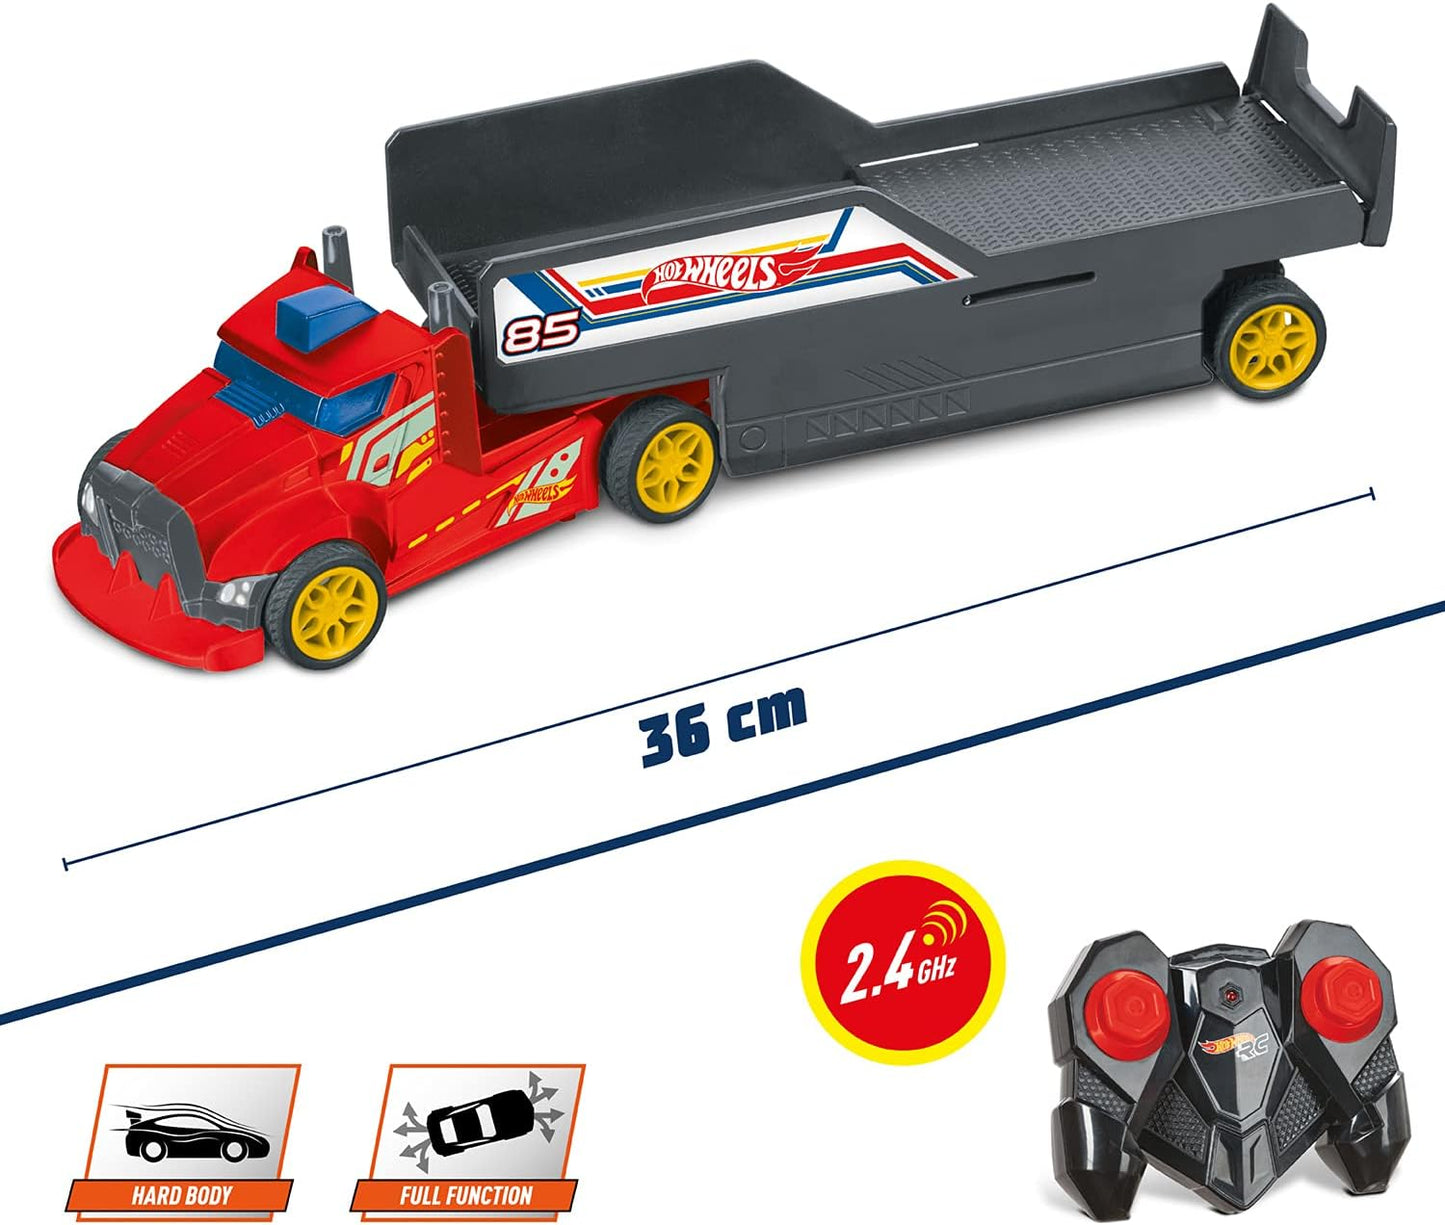 Hot Wheels Mondo Motors Double Truck ferngesteuerter LKW + Auto Action Spielzeug Kinder Fahrzeug Auto